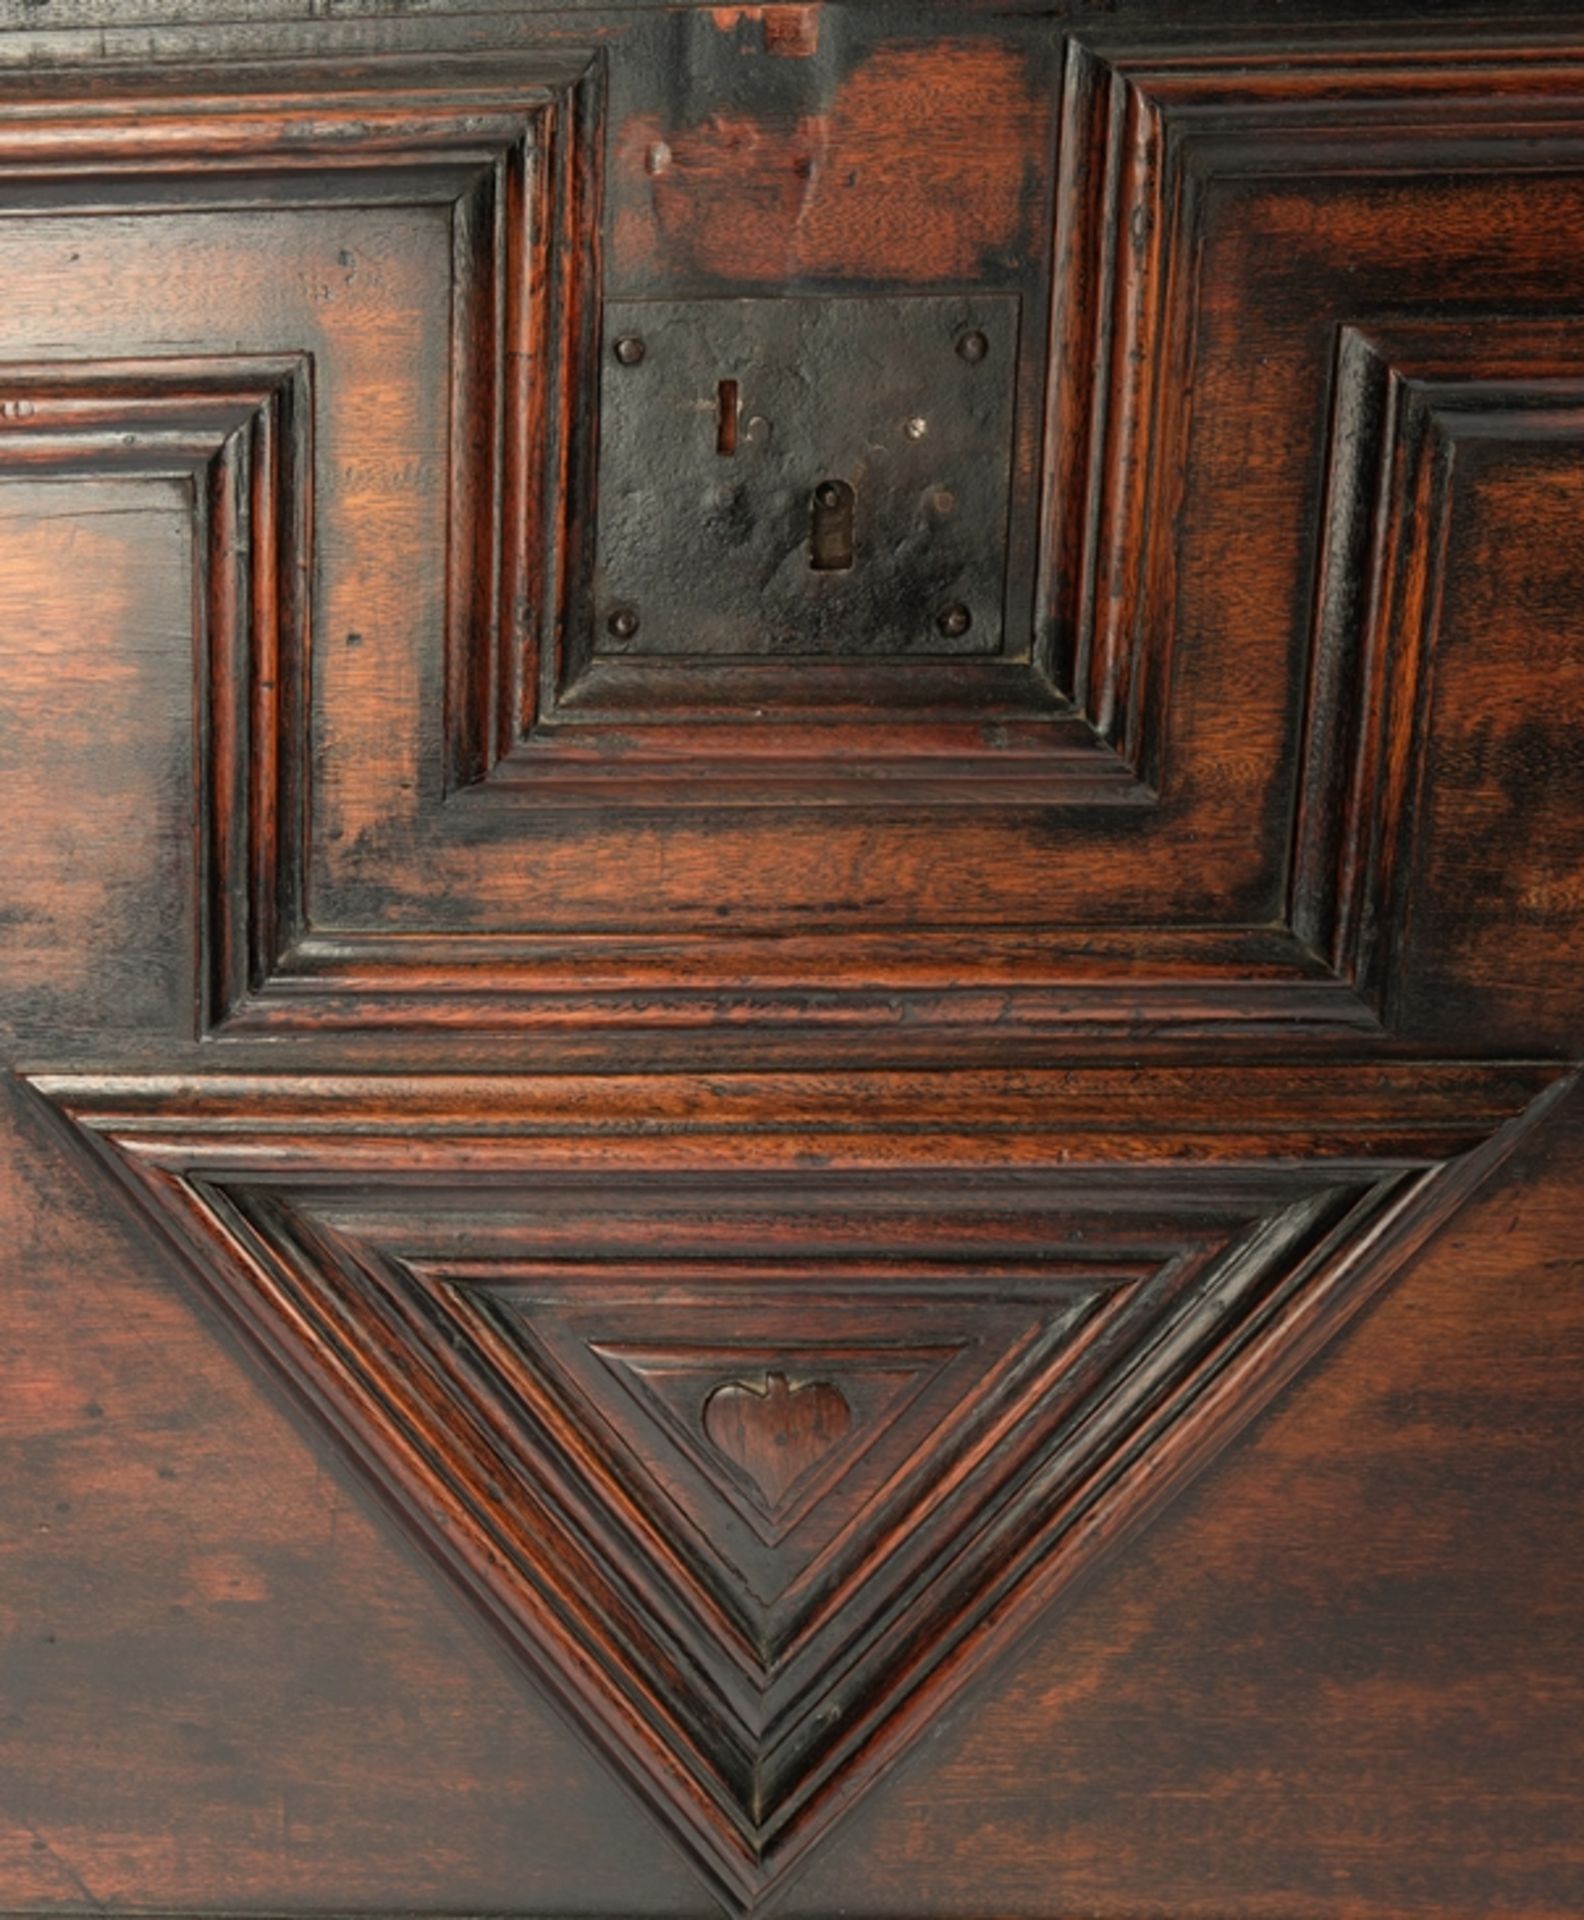 Baroque chest, Portugal/Brazil, 17th/18th century, reddish hardwood, rectangular body with flat lid - Image 4 of 7